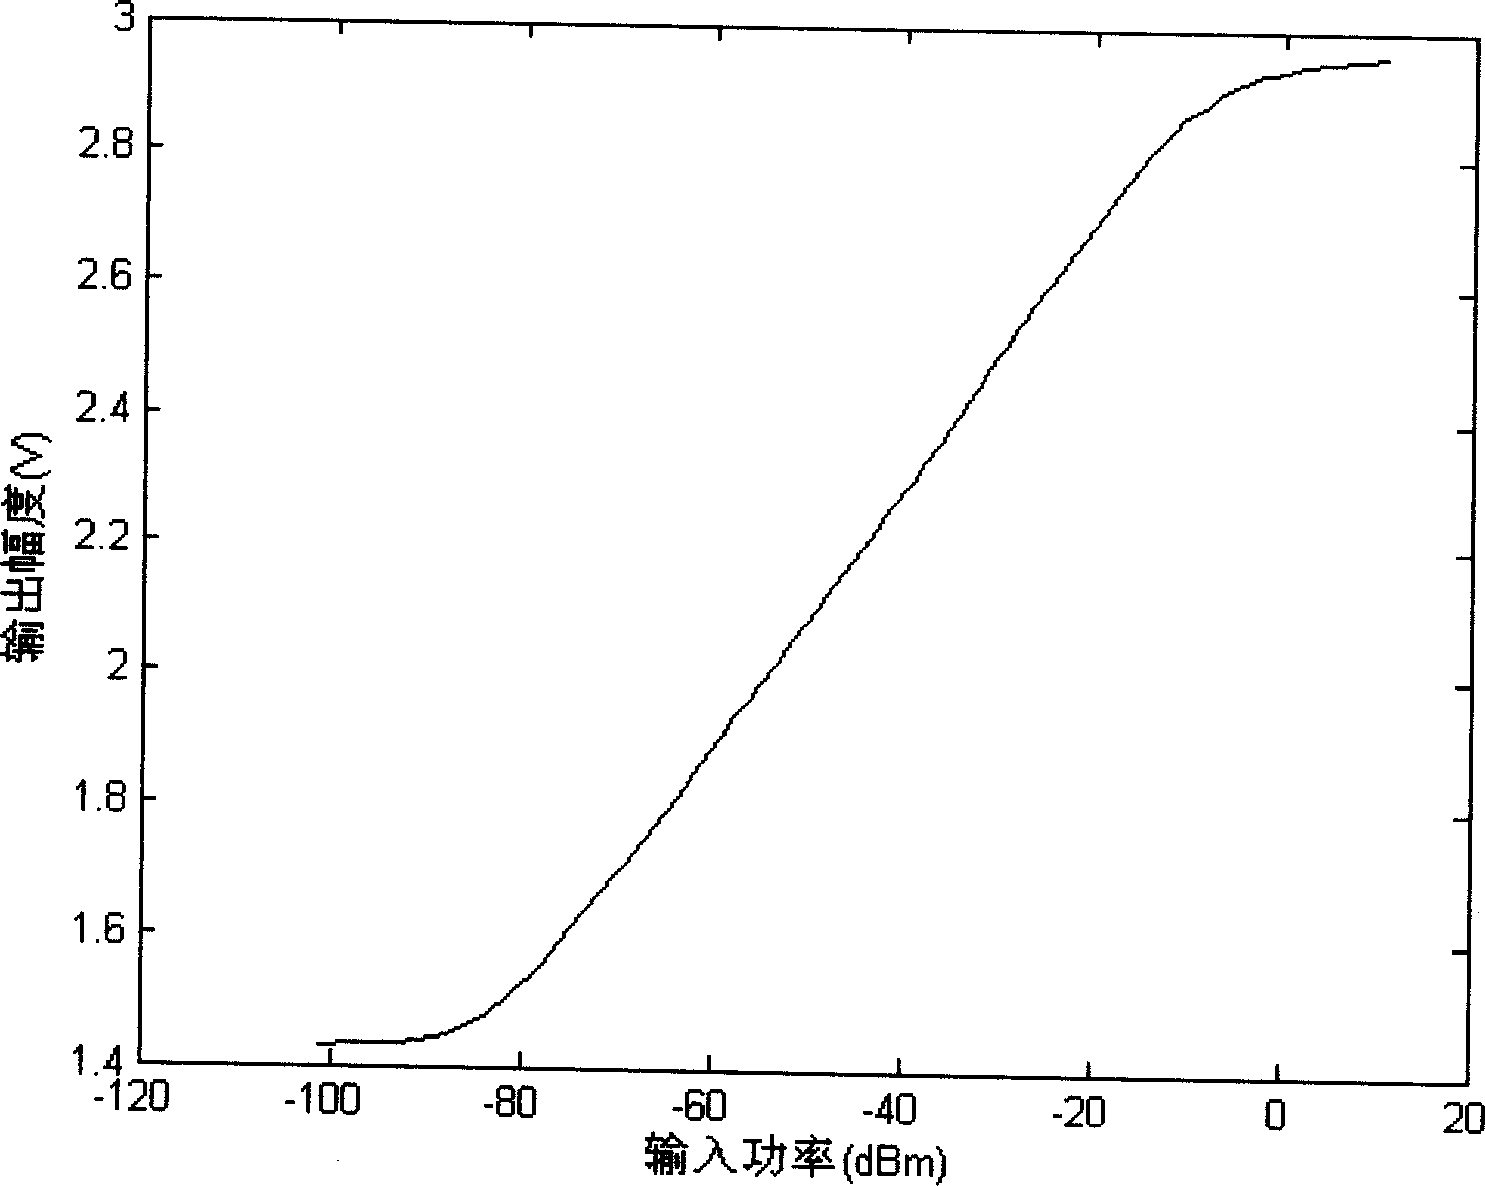 BiCMOS logarithmic amplifier